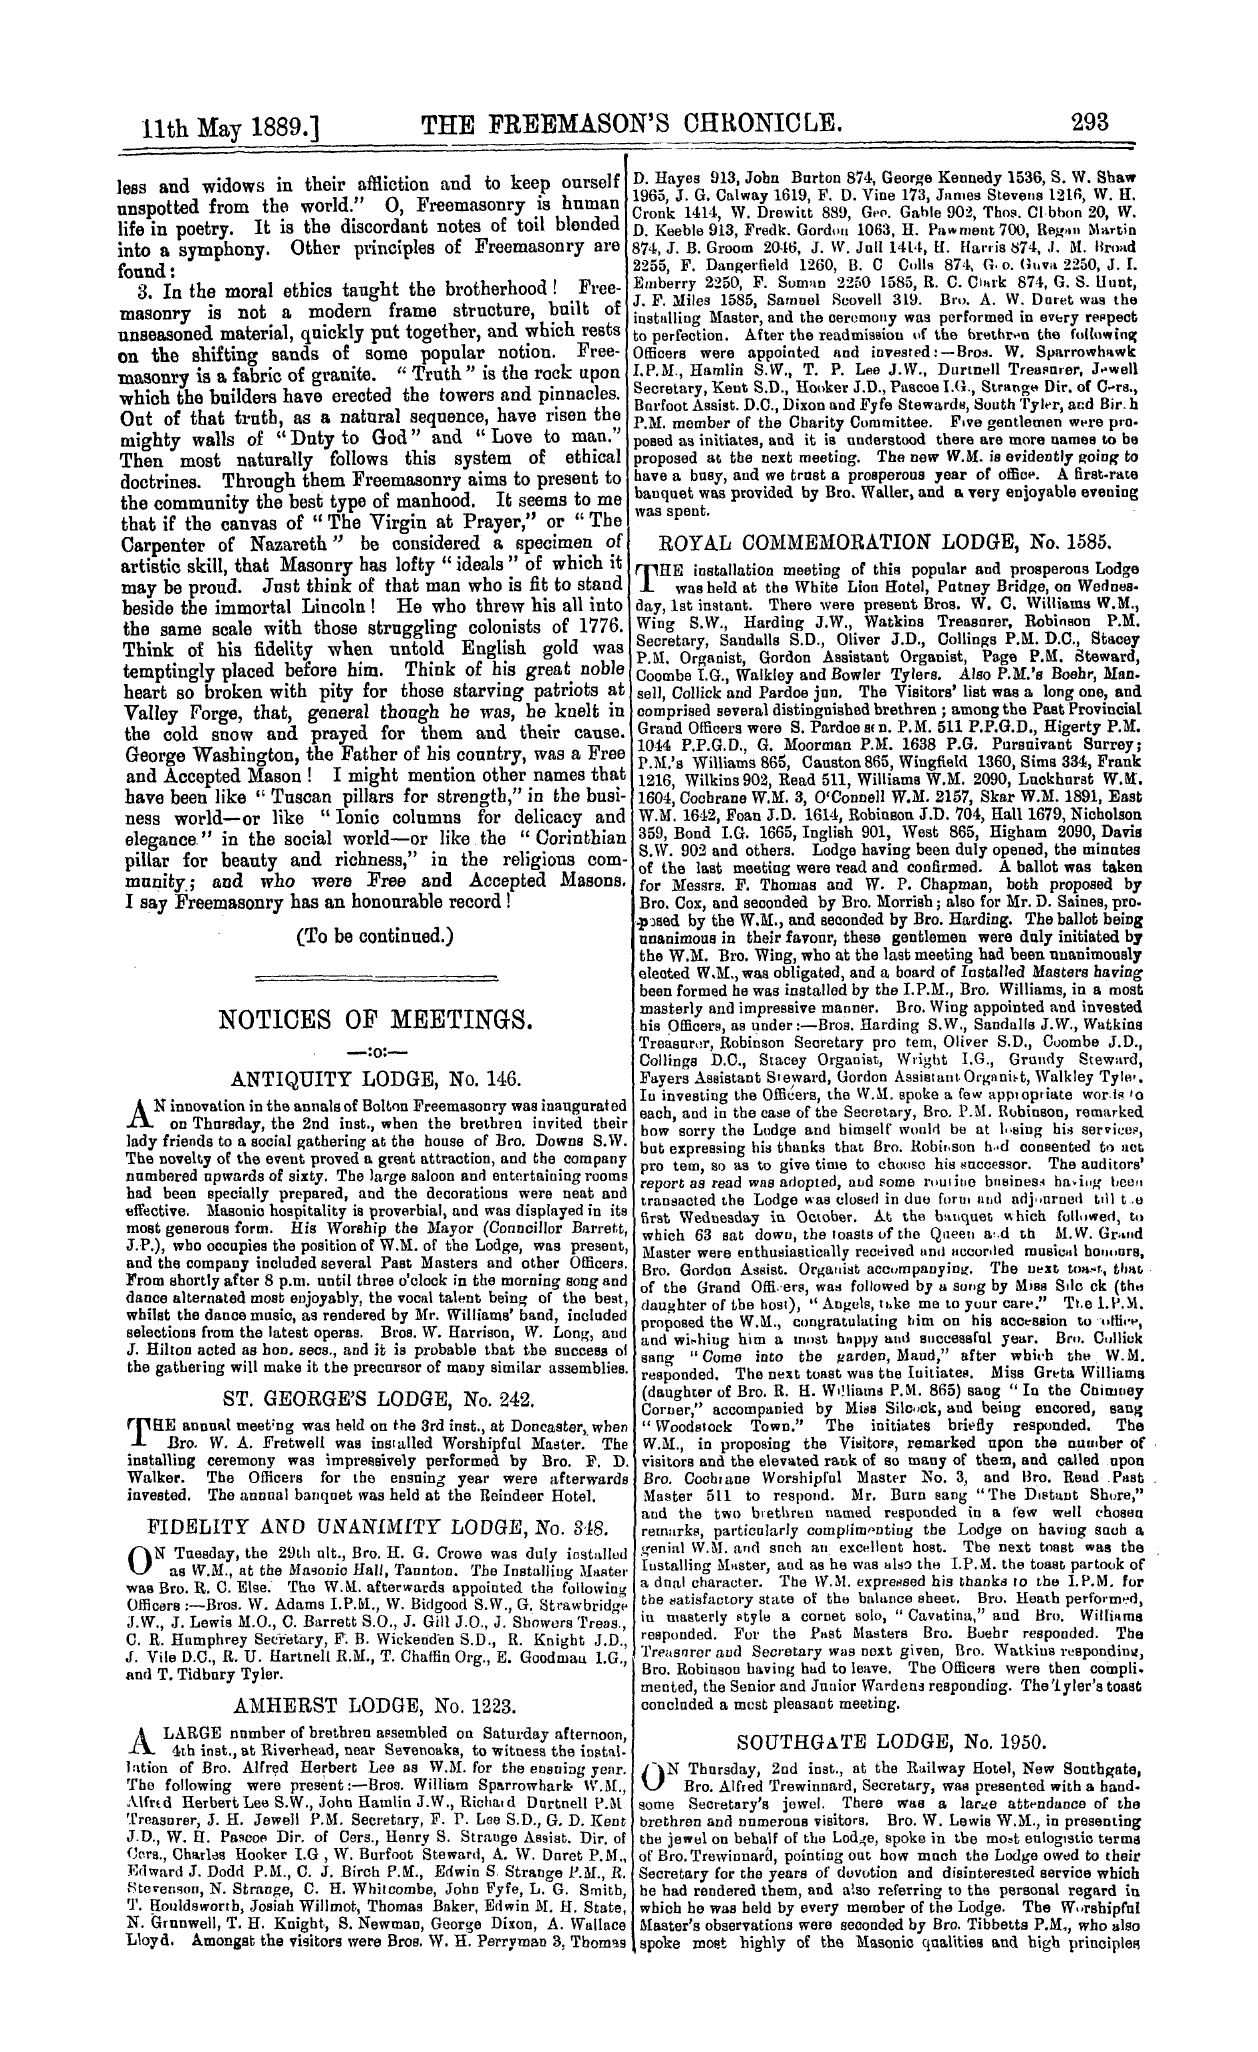 The Freemason's Chronicle: 1889-05-11: 5